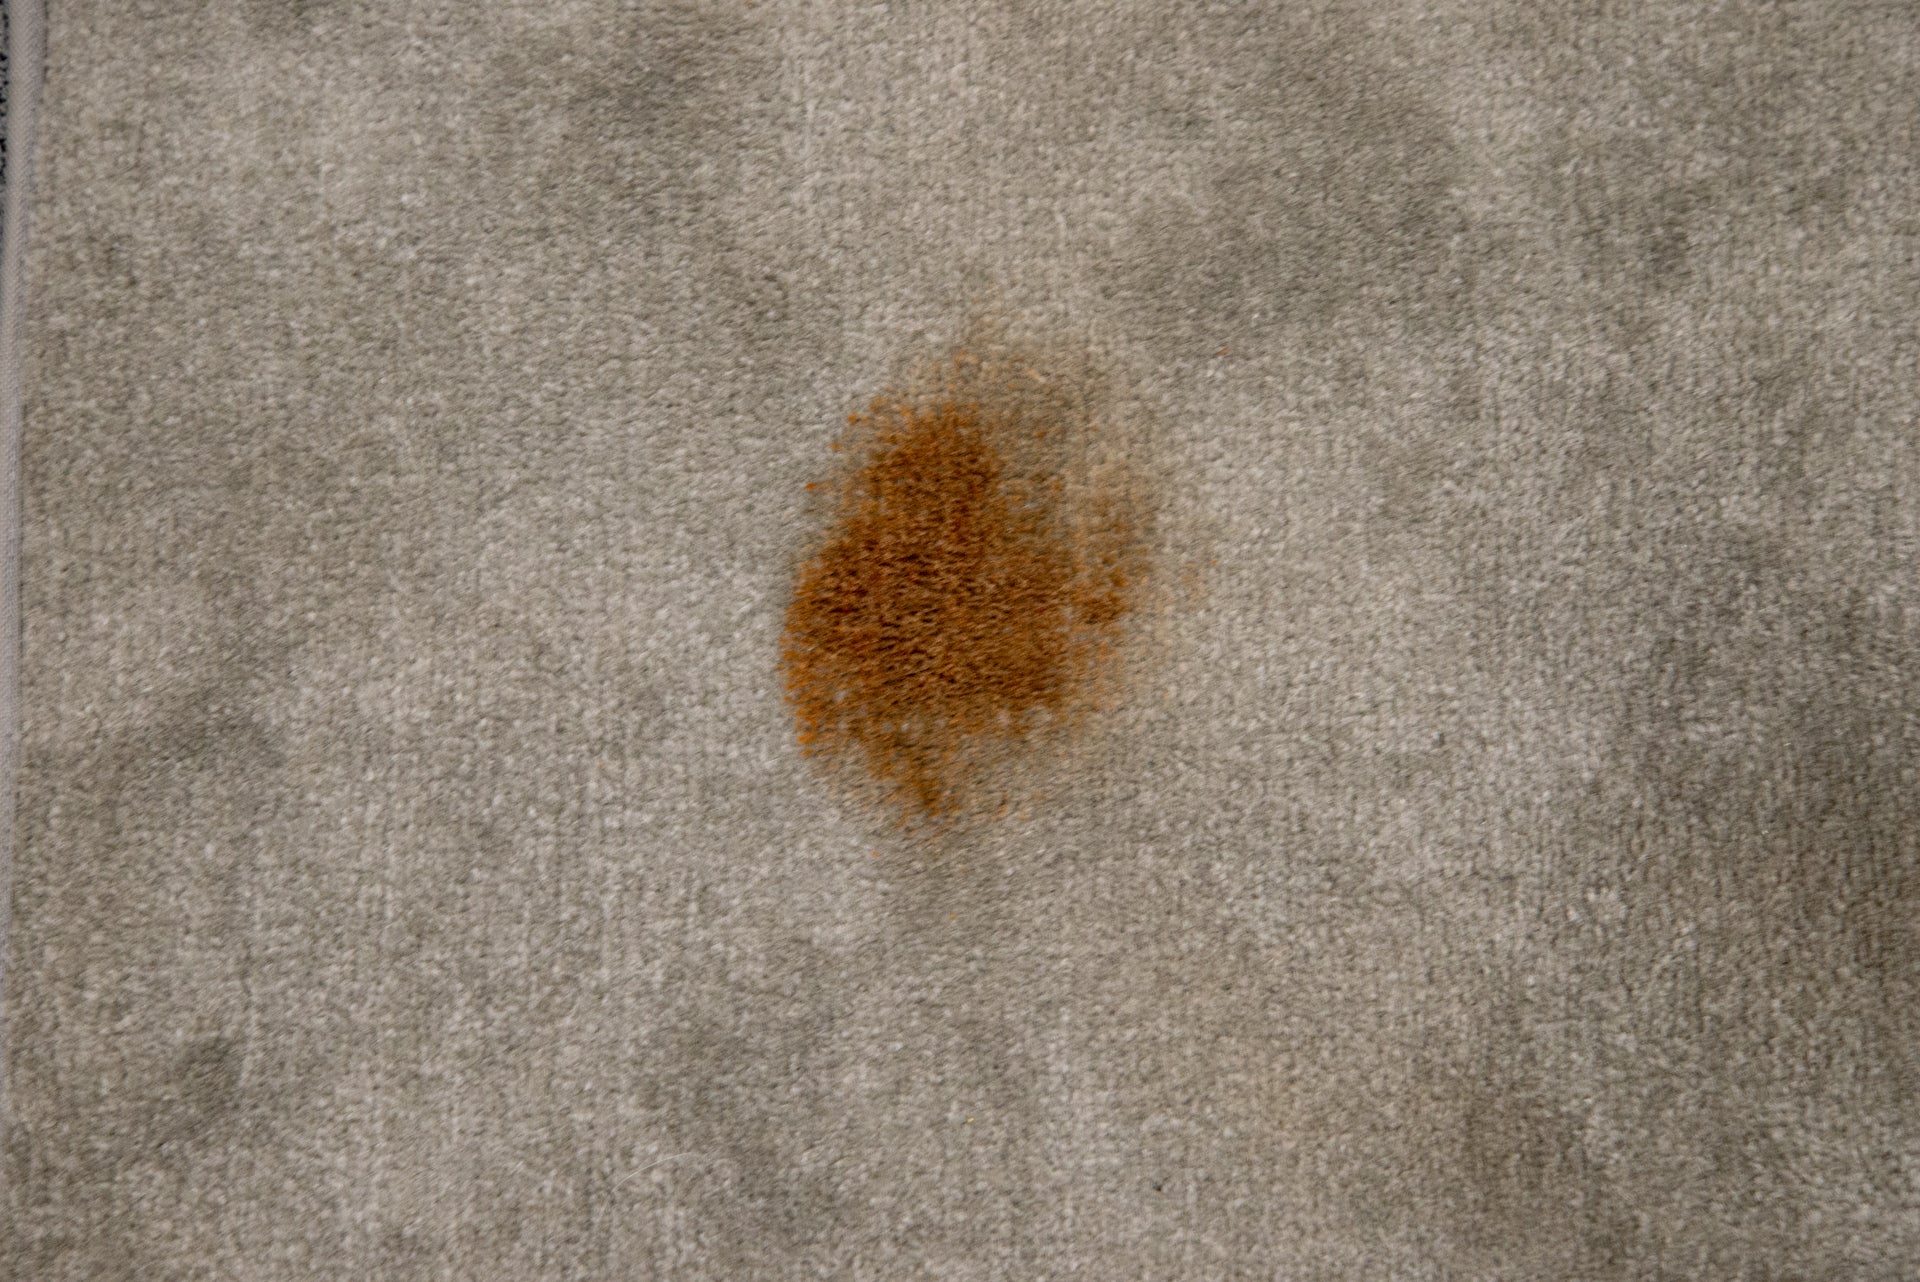 Vax Platinum SmartWash Carpet Cleaner ketchup stain